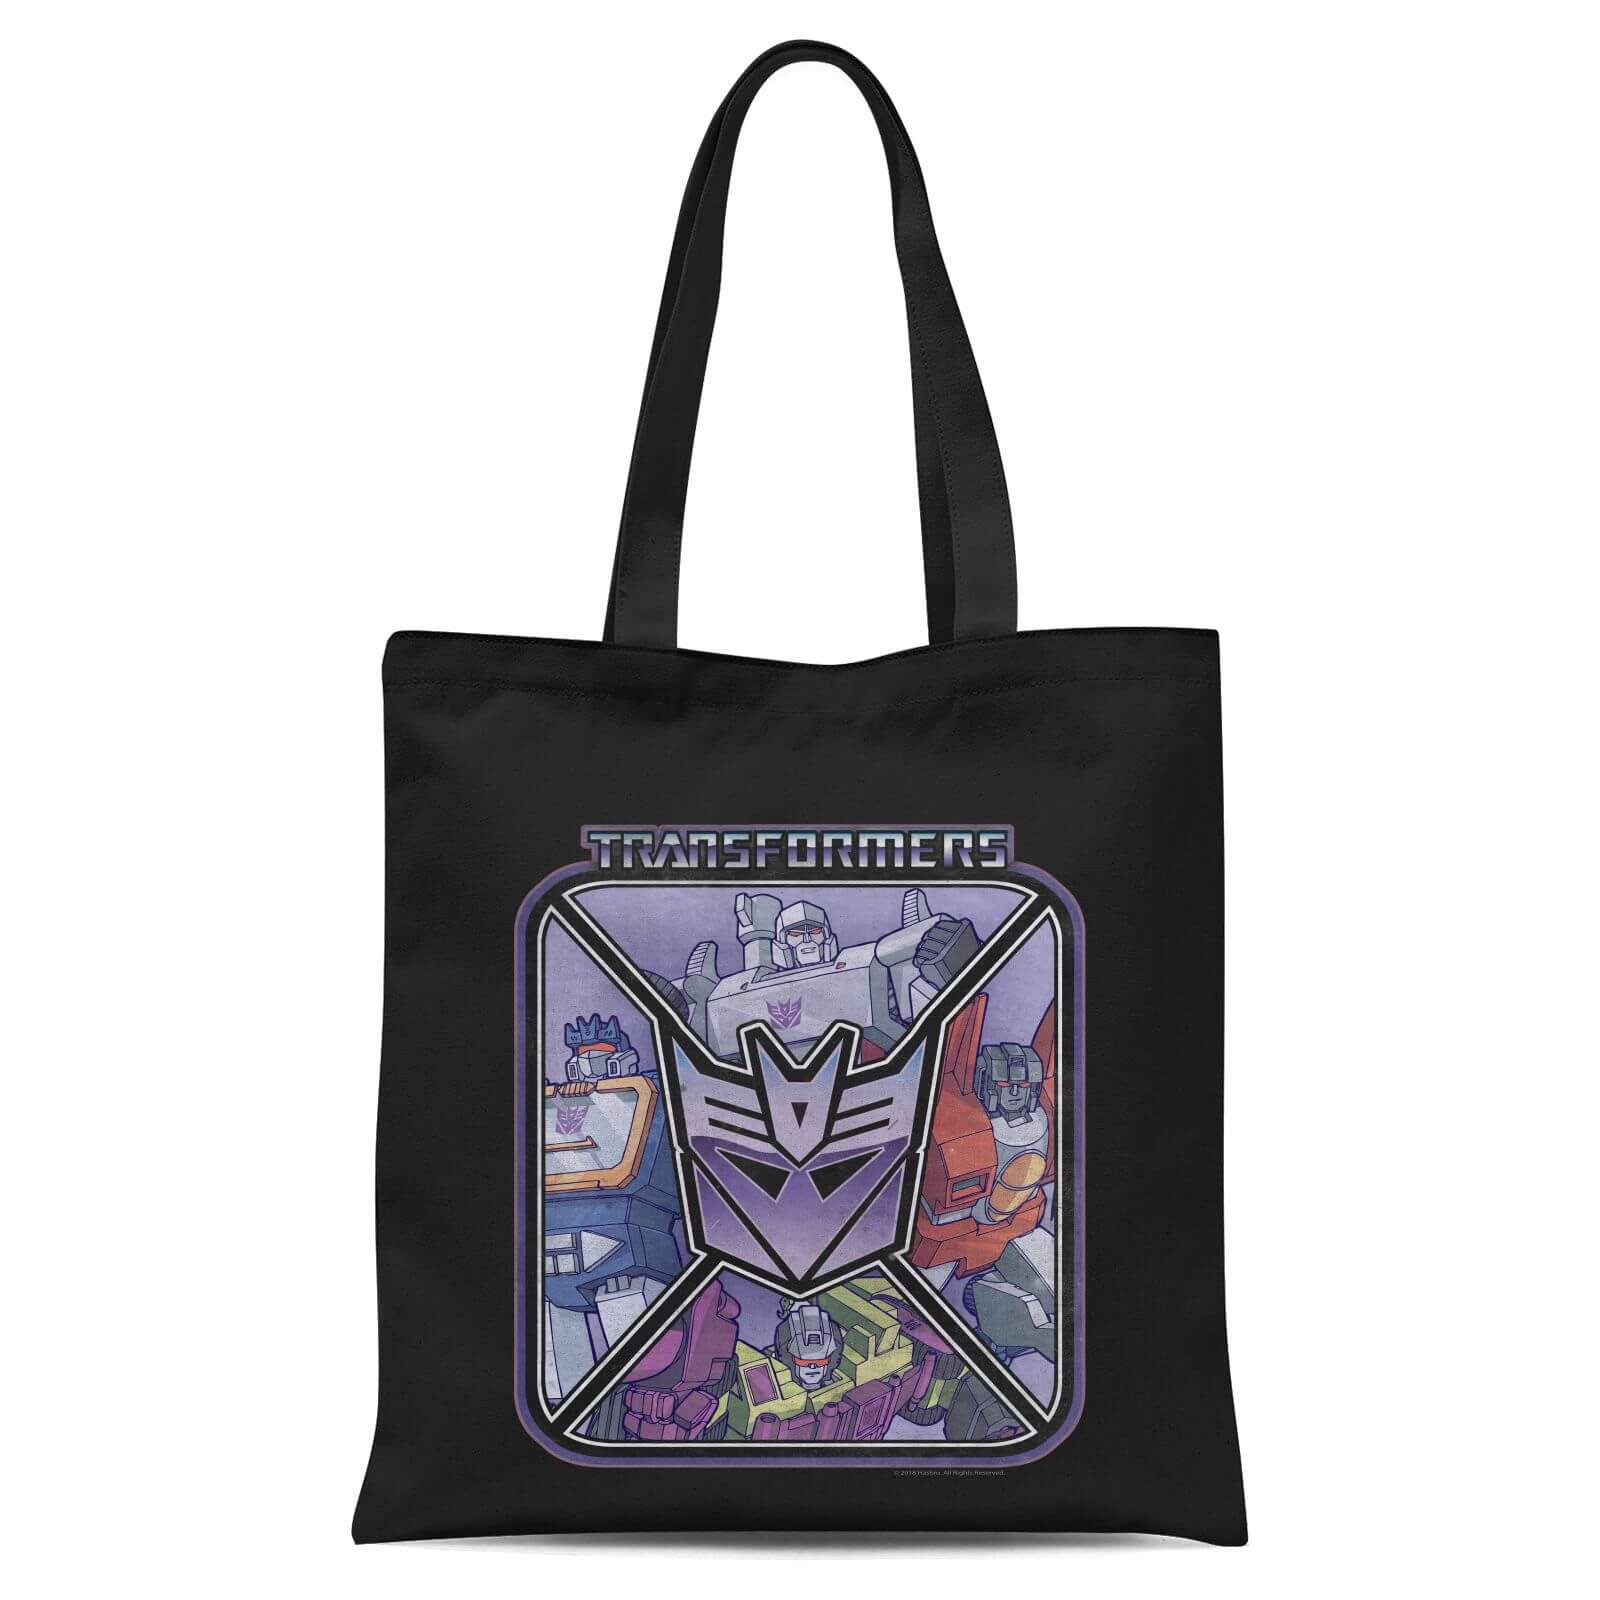 Transformers Decepticons Tote Tote Bag - Black